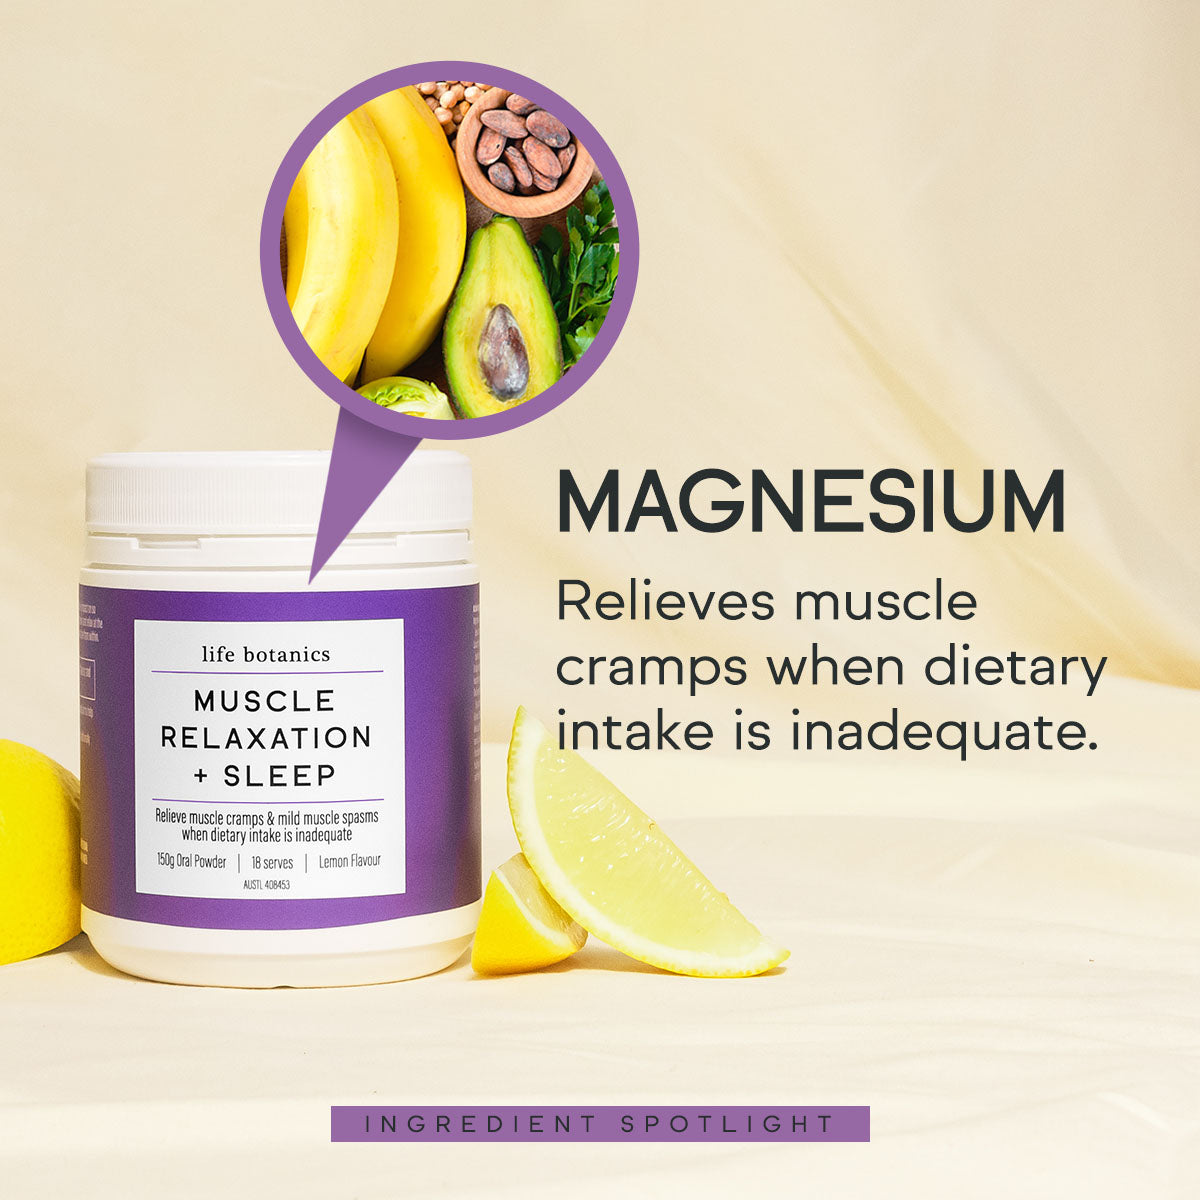 life botanics Muscle Relaxation + Sleep Magnesium 180